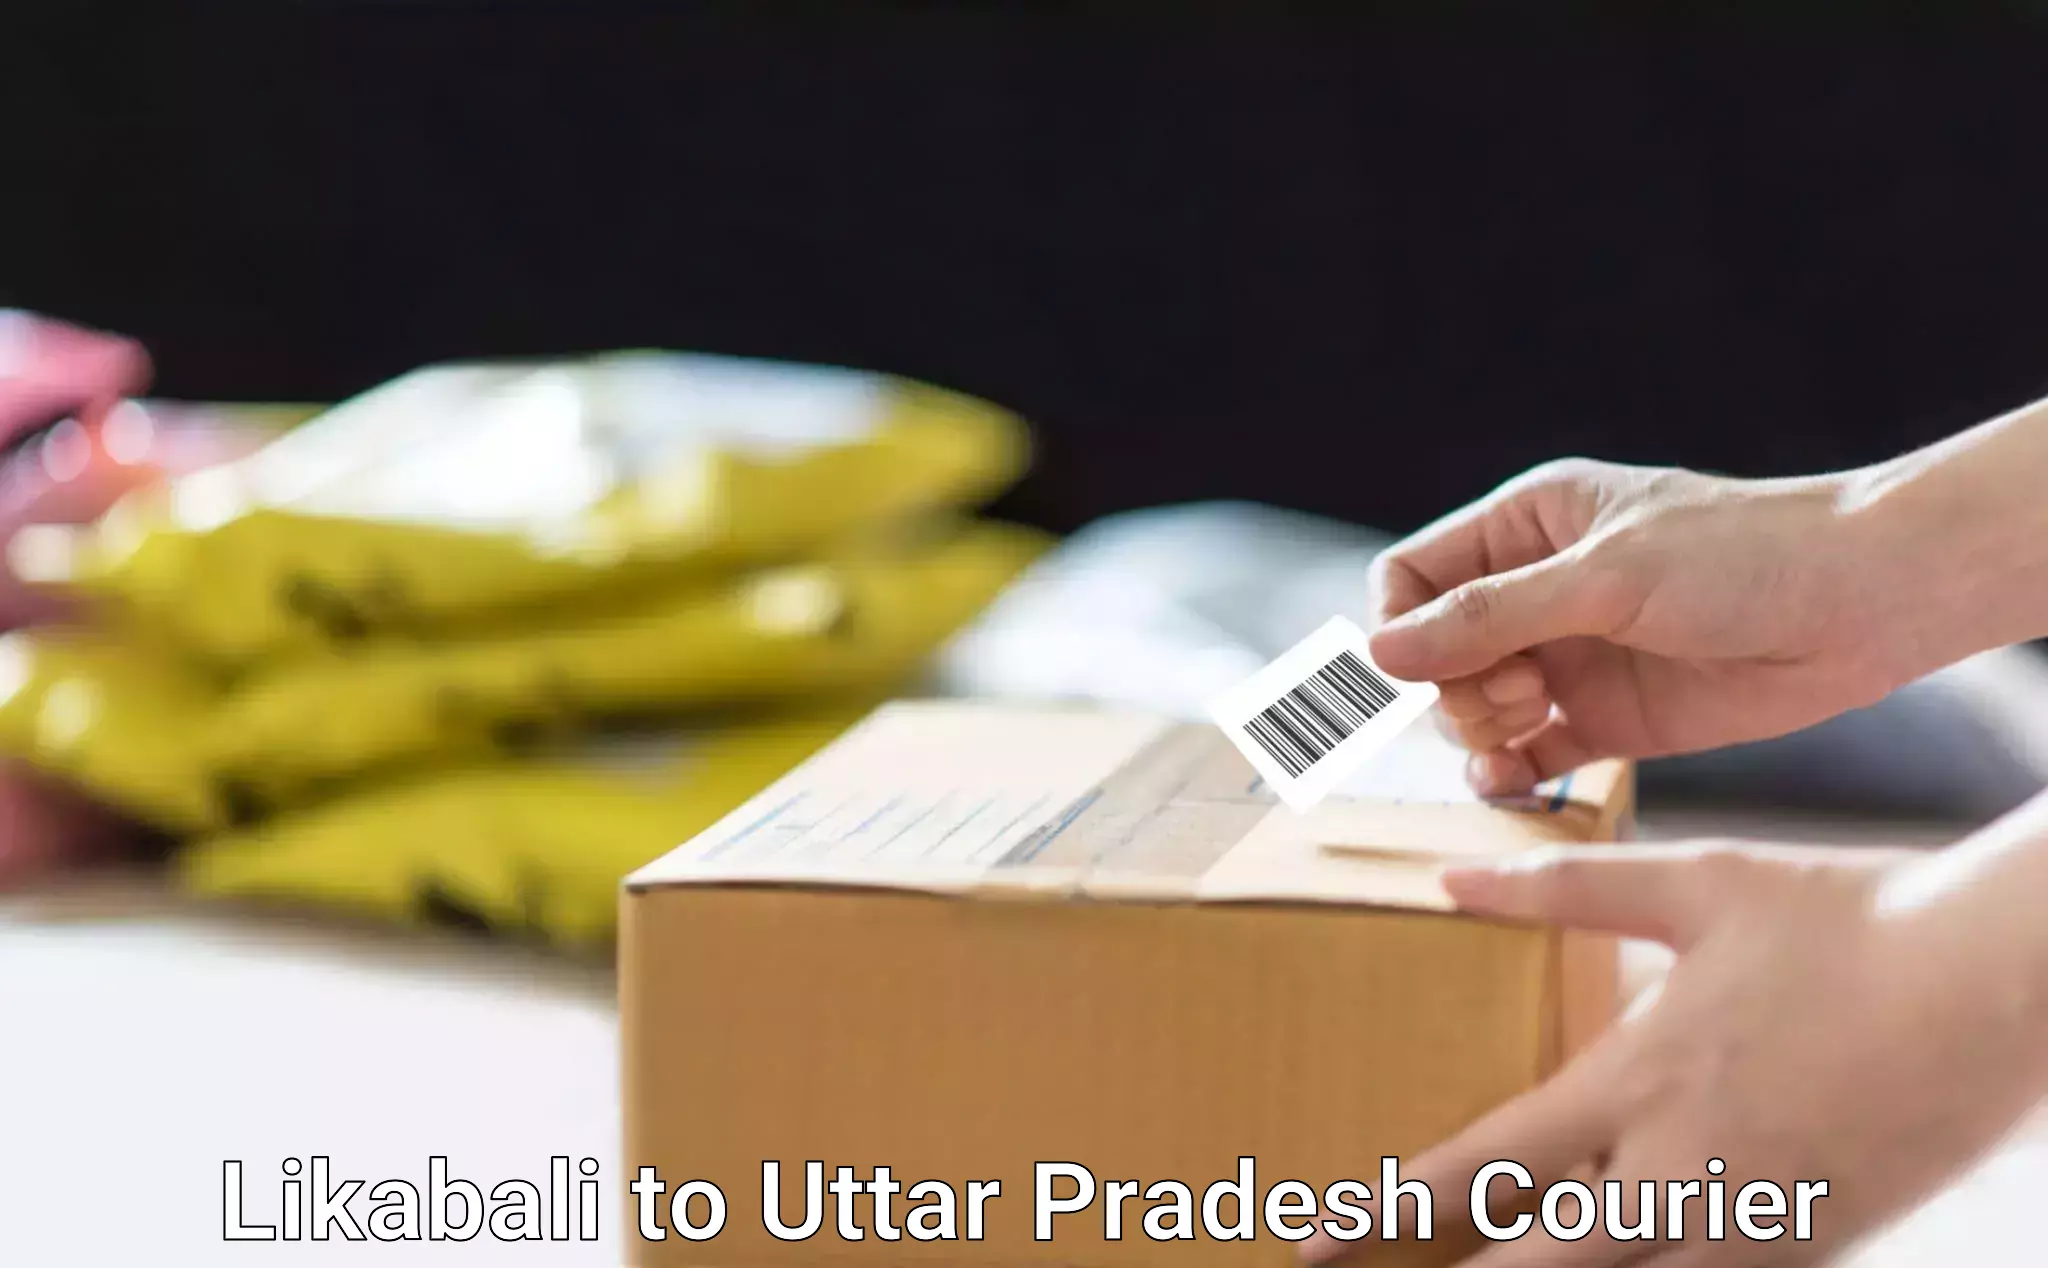 24/7 courier service Likabali to Uttar Pradesh